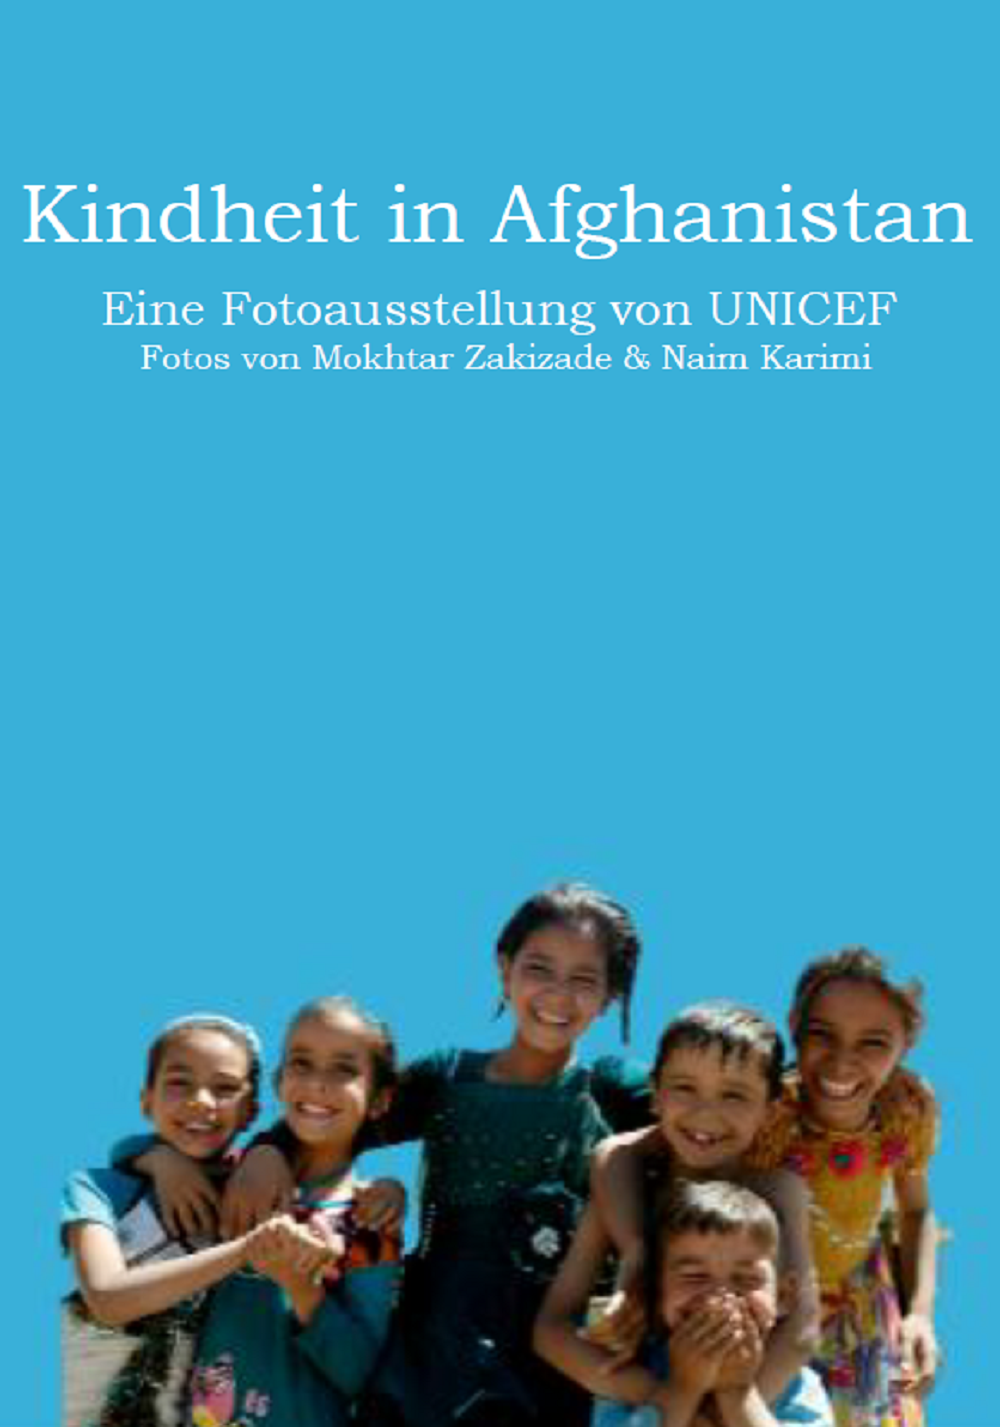 Flyer "Kindheit in Afghanistan" © UNICEF